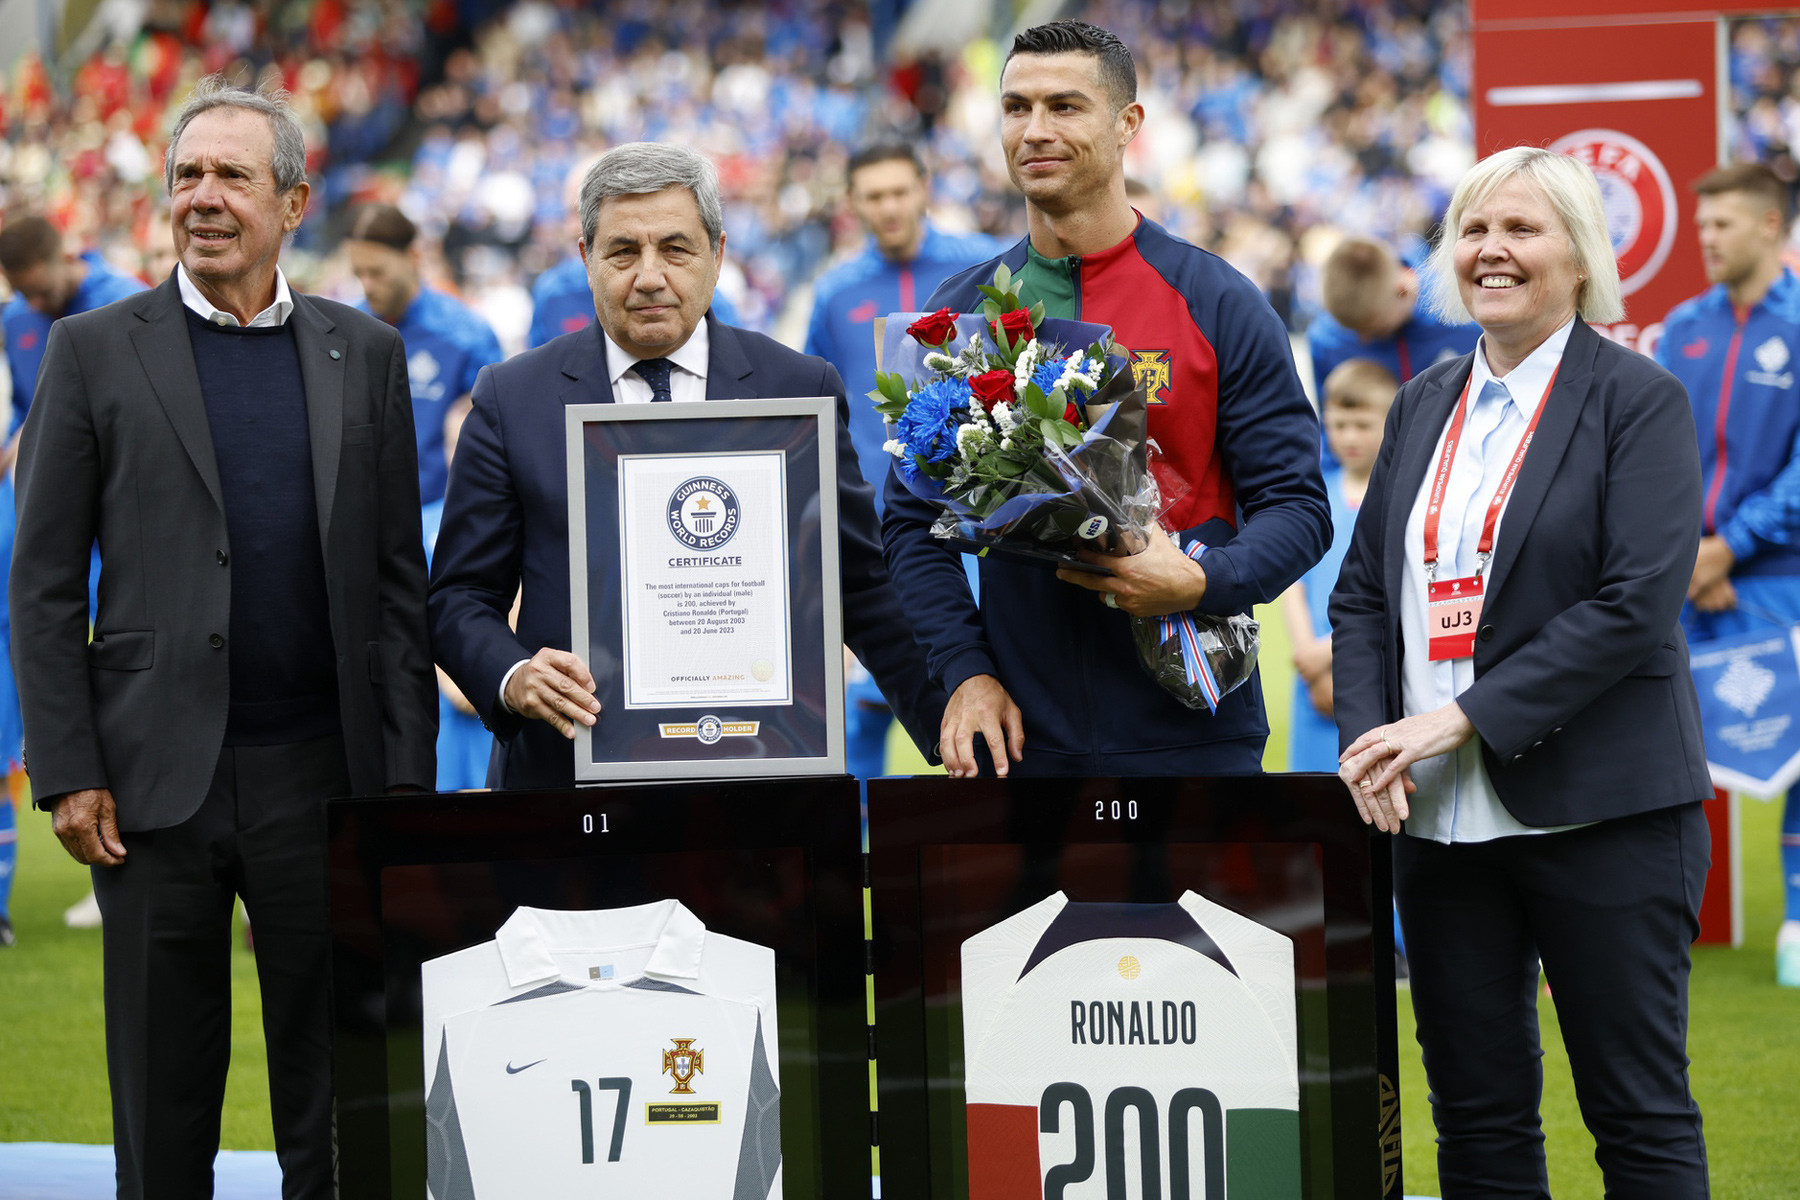 Cristiano Ronaldo cán mốc 200 trận: Kỷ lục gia Ronaldo